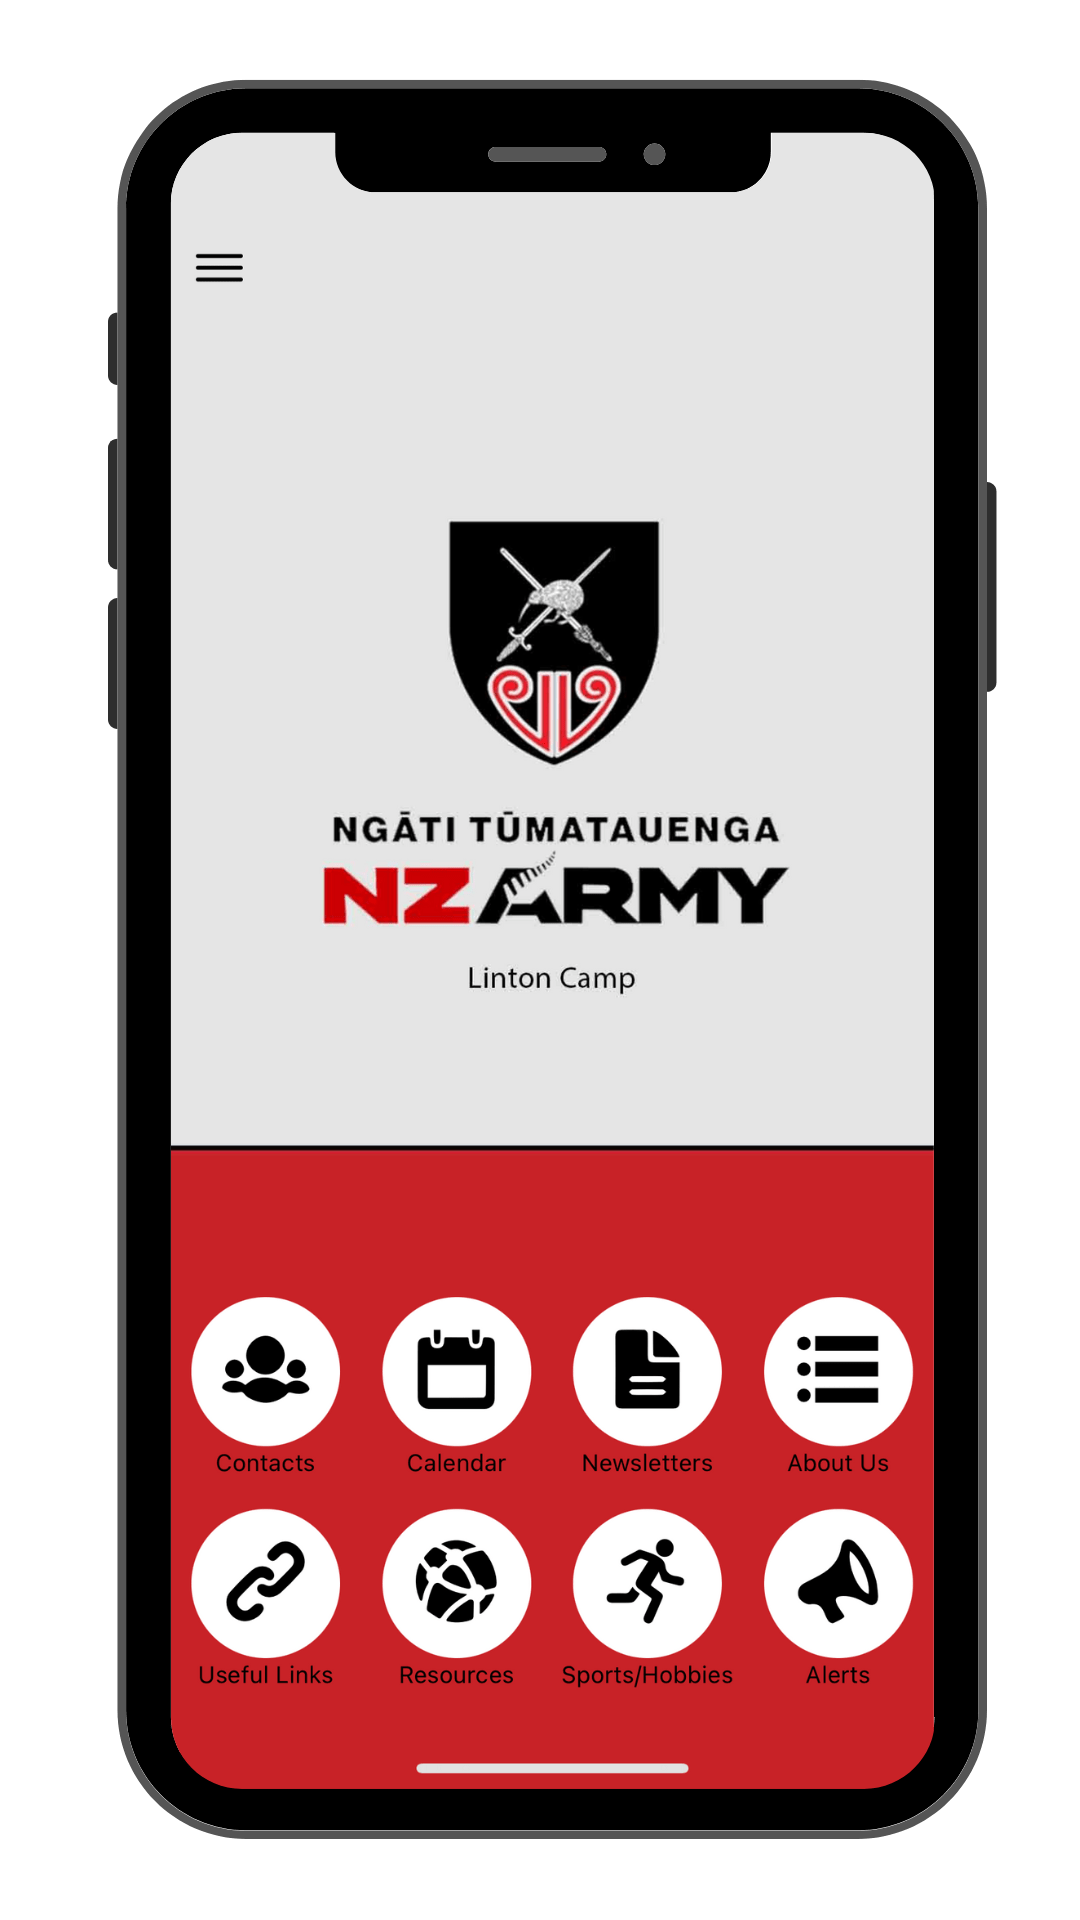 NZ army club app on mobile